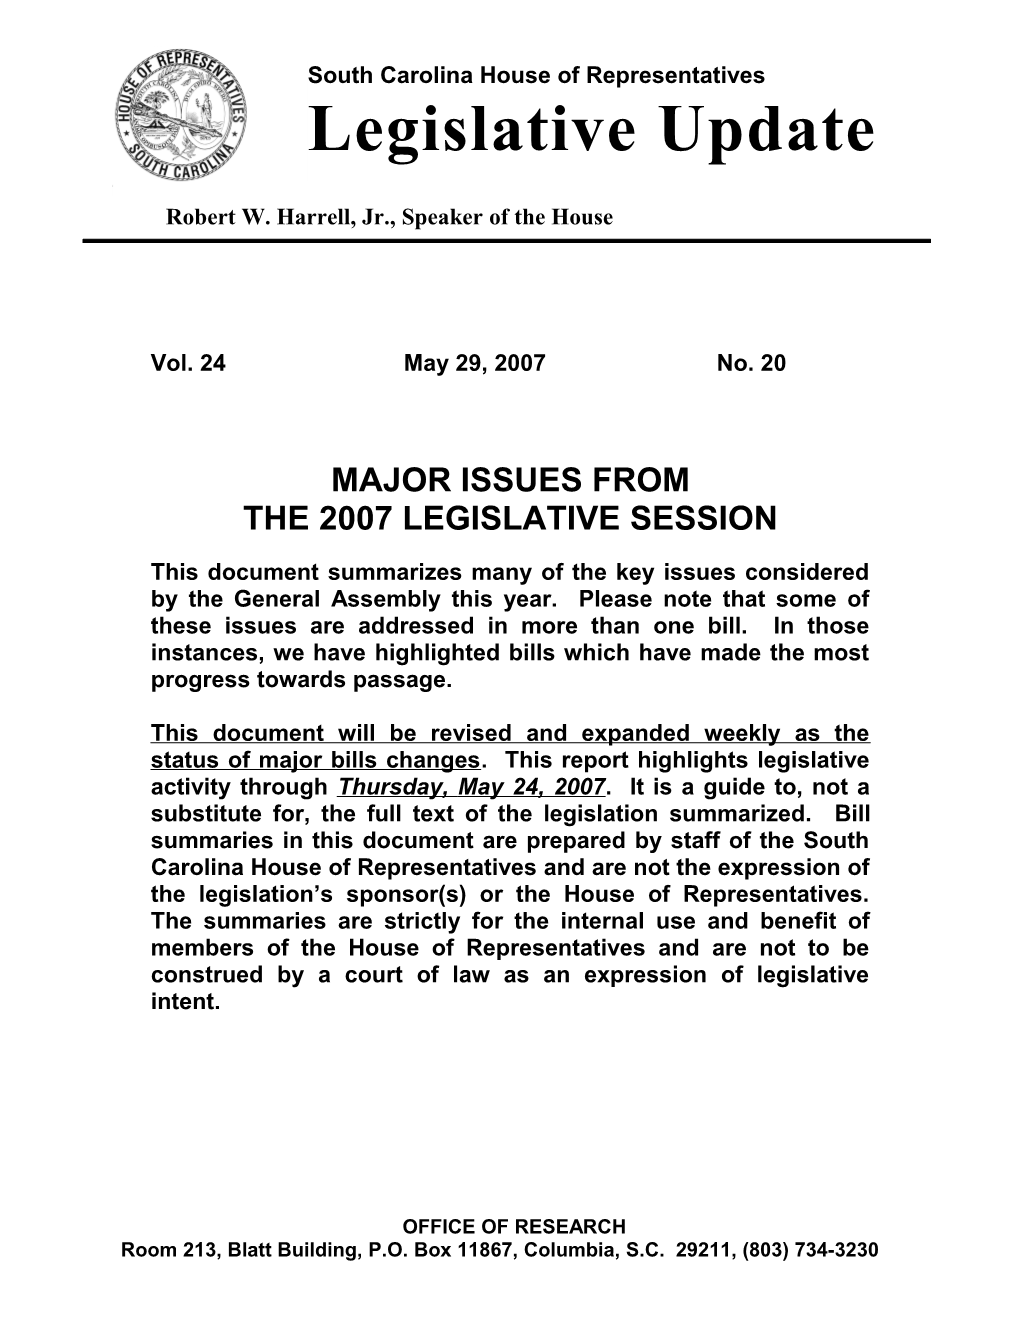 Legislative Update - Vol. 24 No. 20 May 29, 2007 - South Carolina Legislature Online